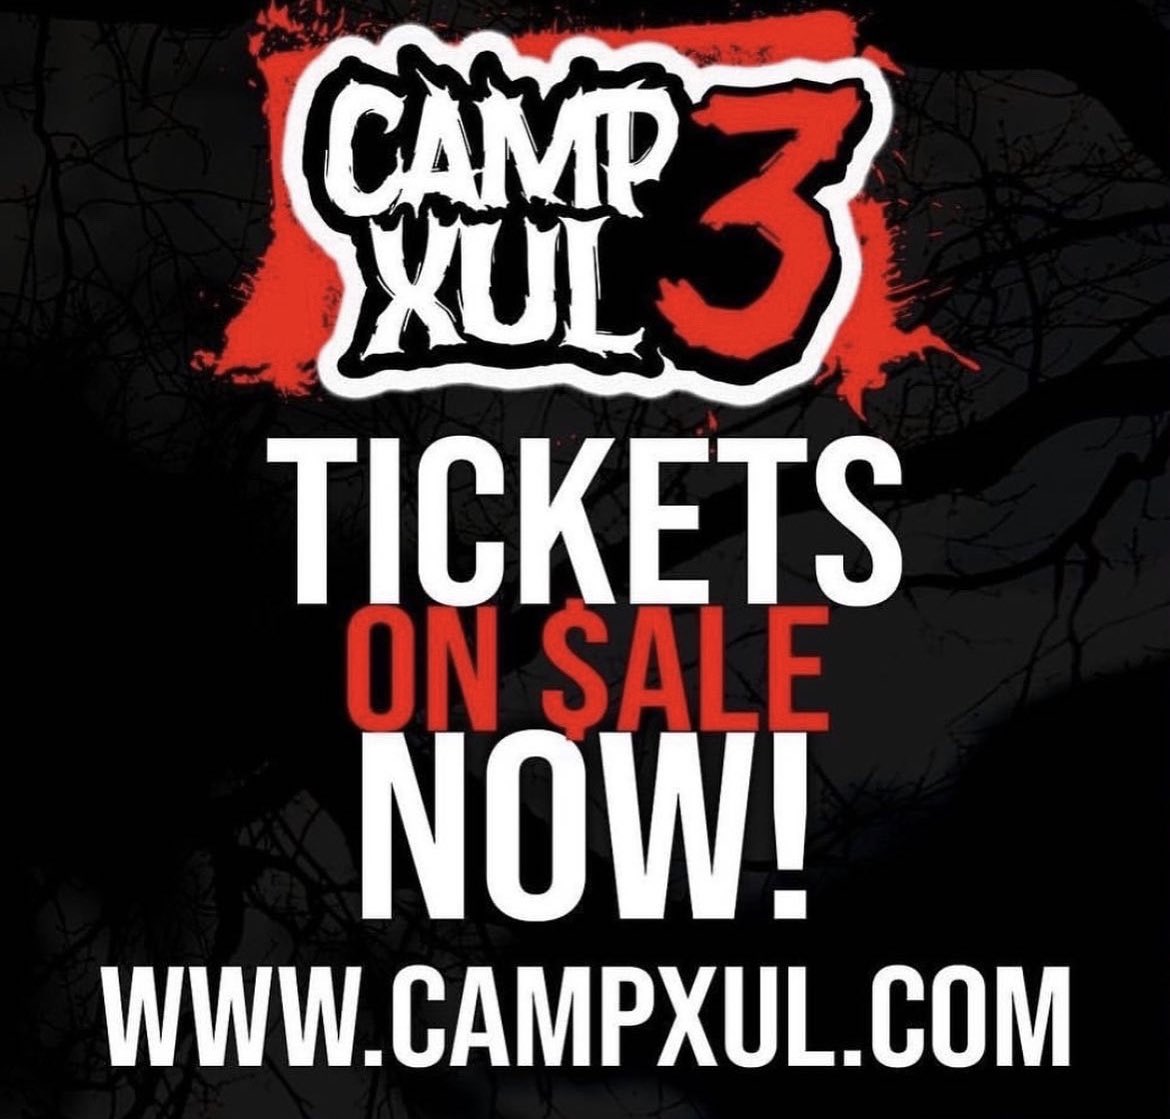 SON takes the stage Saturday night @AllaXulElu ‘s Camp Xul 3 in Terror Town - Williamsburg, Ohio‼️
More details here Xuligans 👇
campxul.com
#son #allaxulelu #campxul3 #xuligans